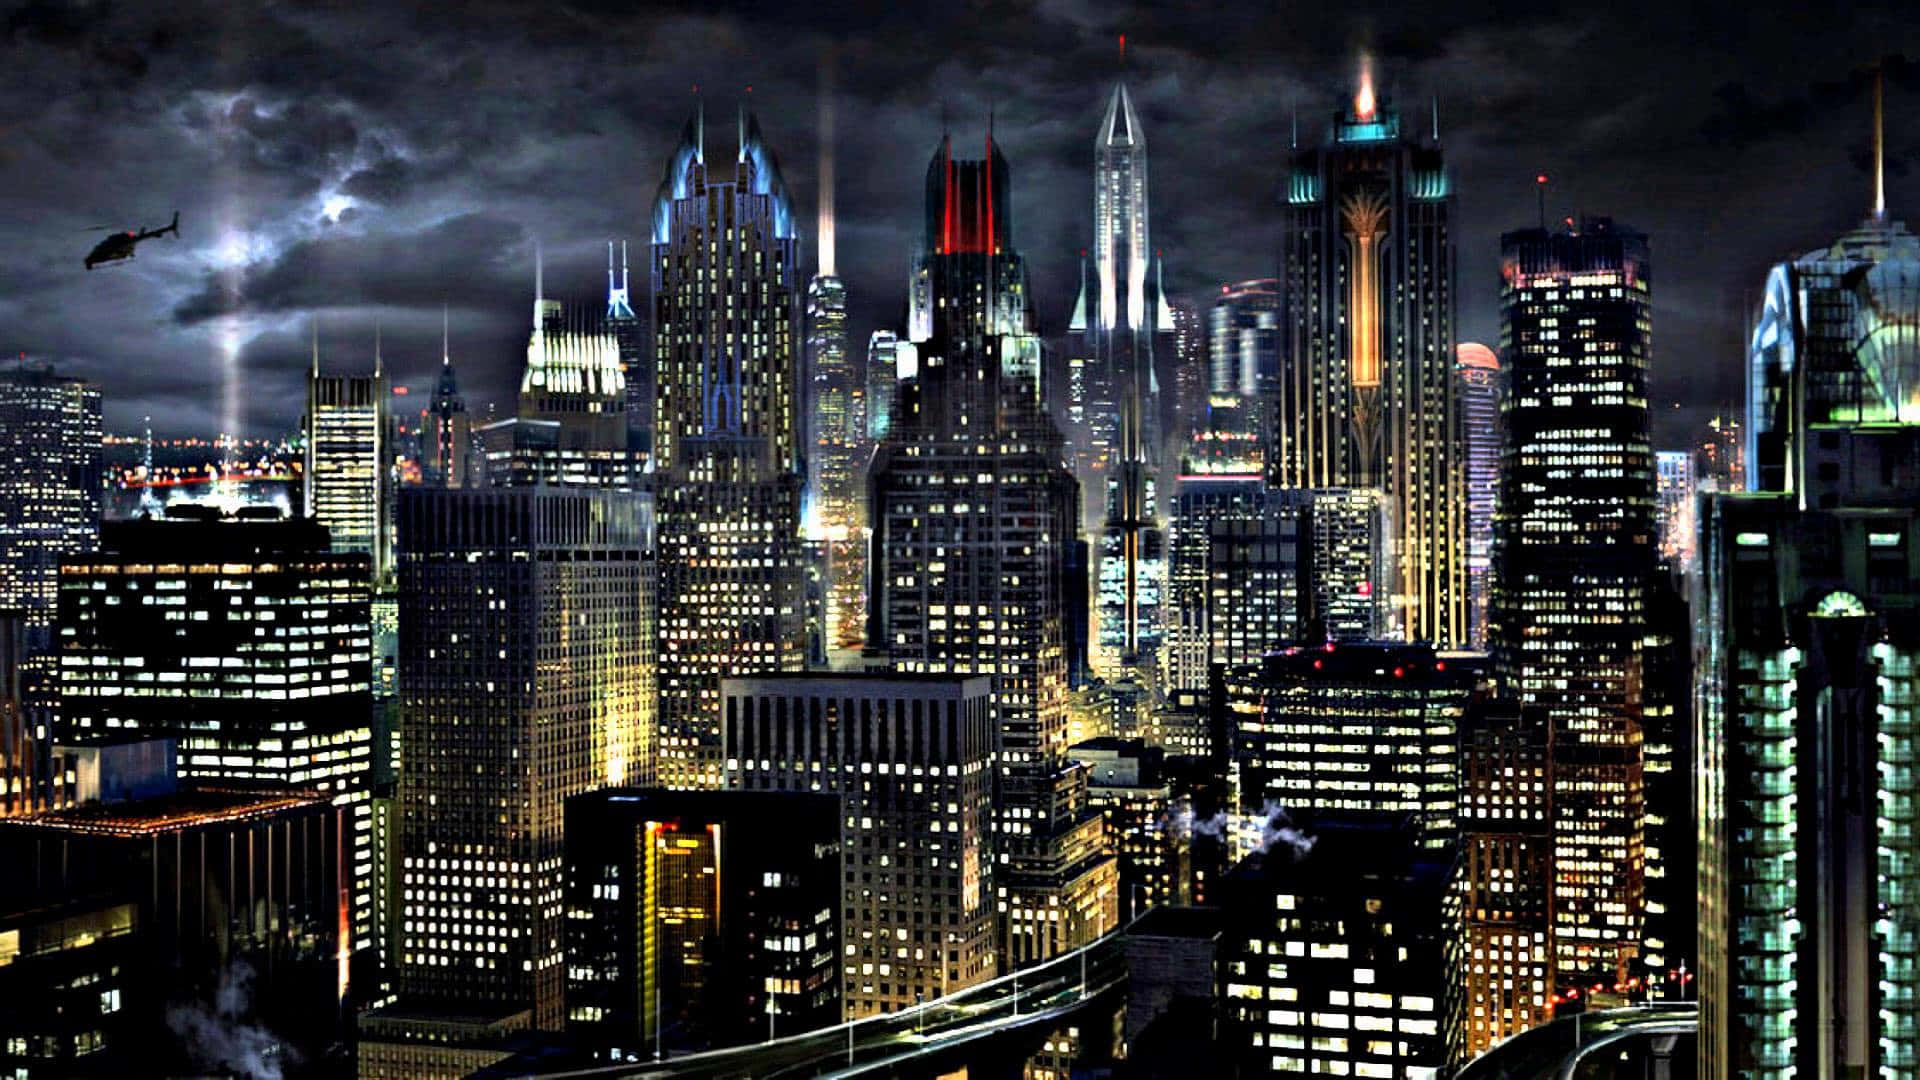 lego city background at night